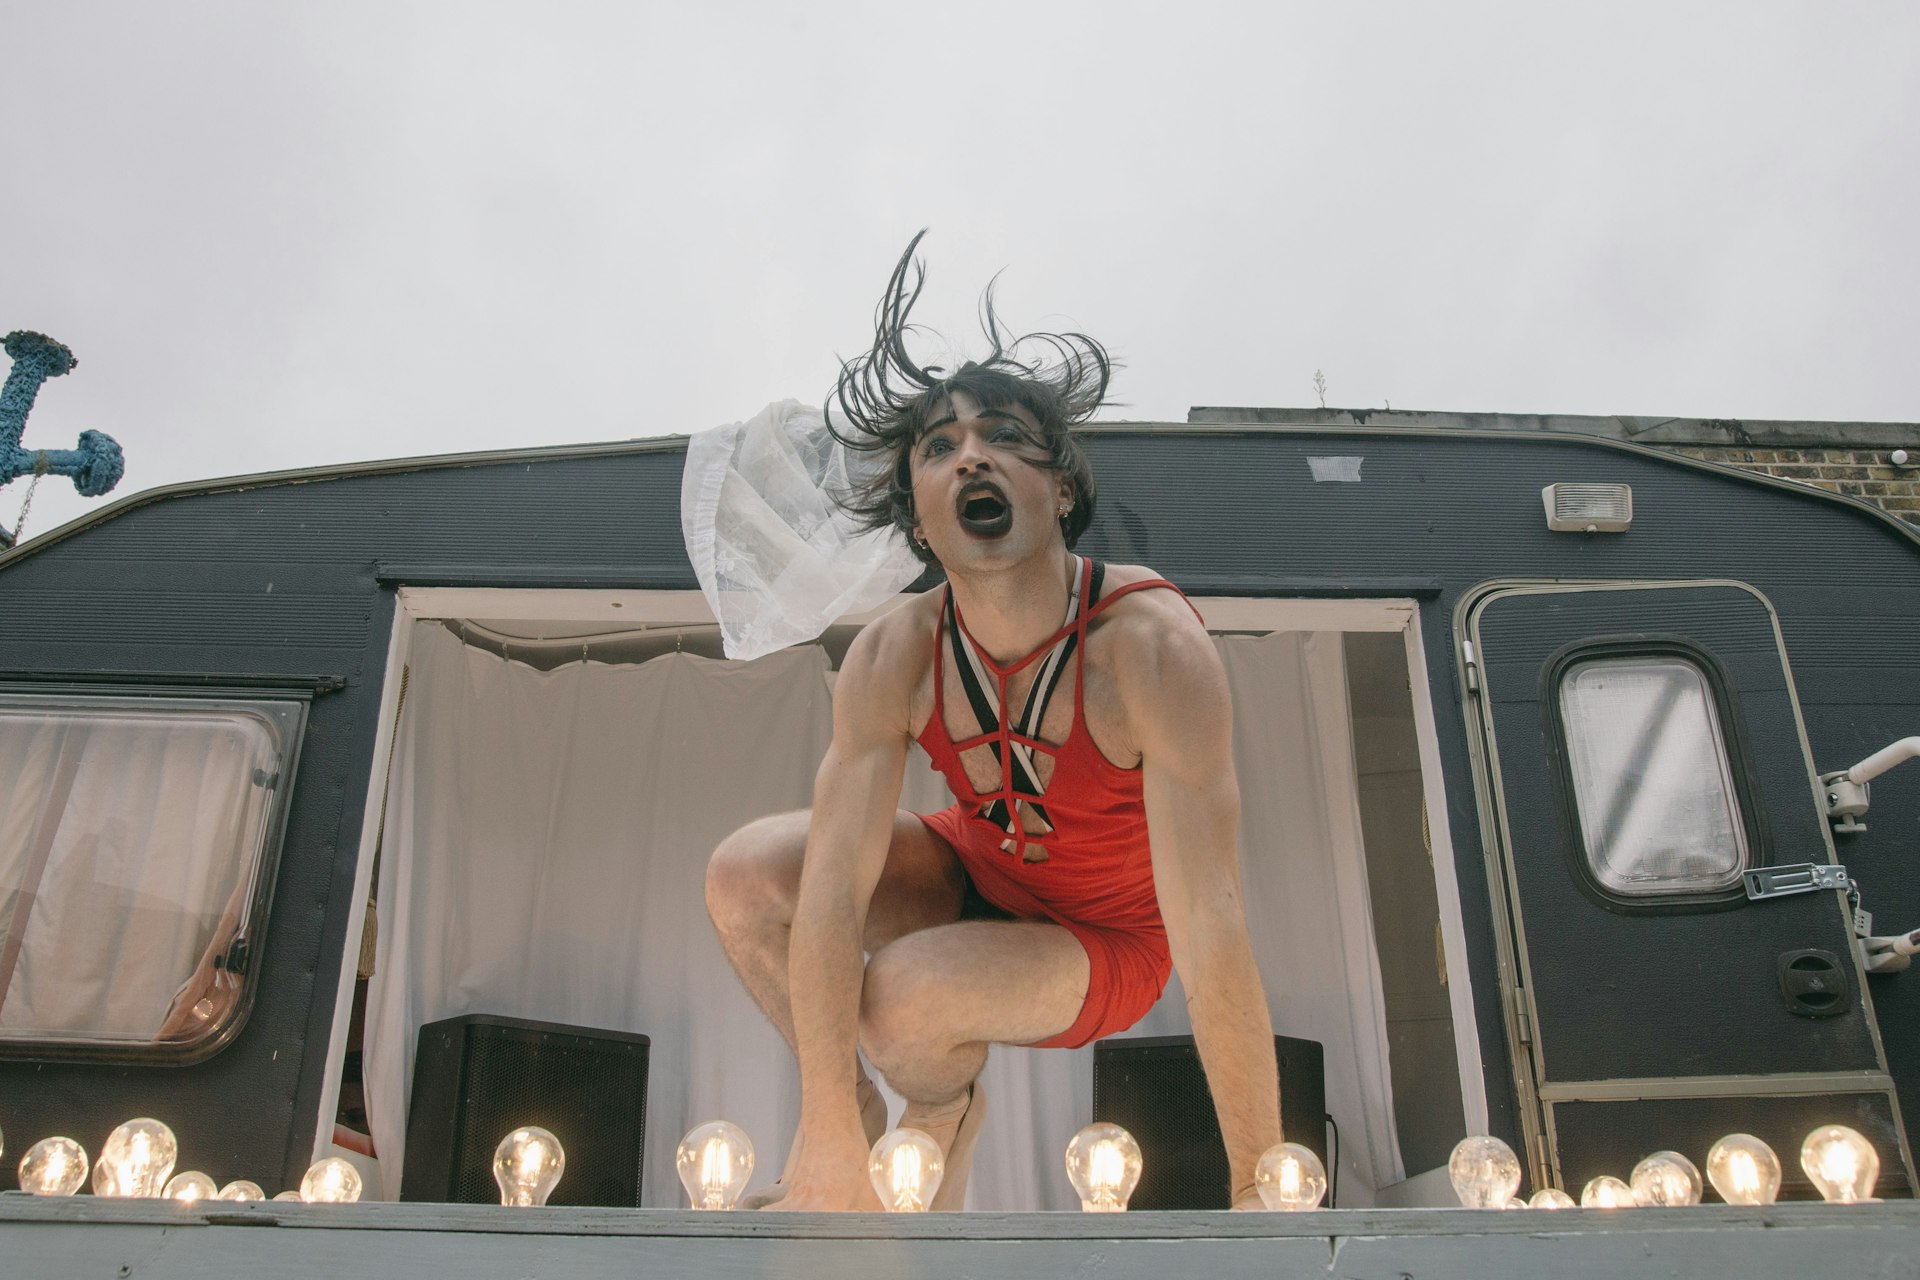 The Camp-er-Van: A travelling DIY queer venue taking on gentrification and prejudice